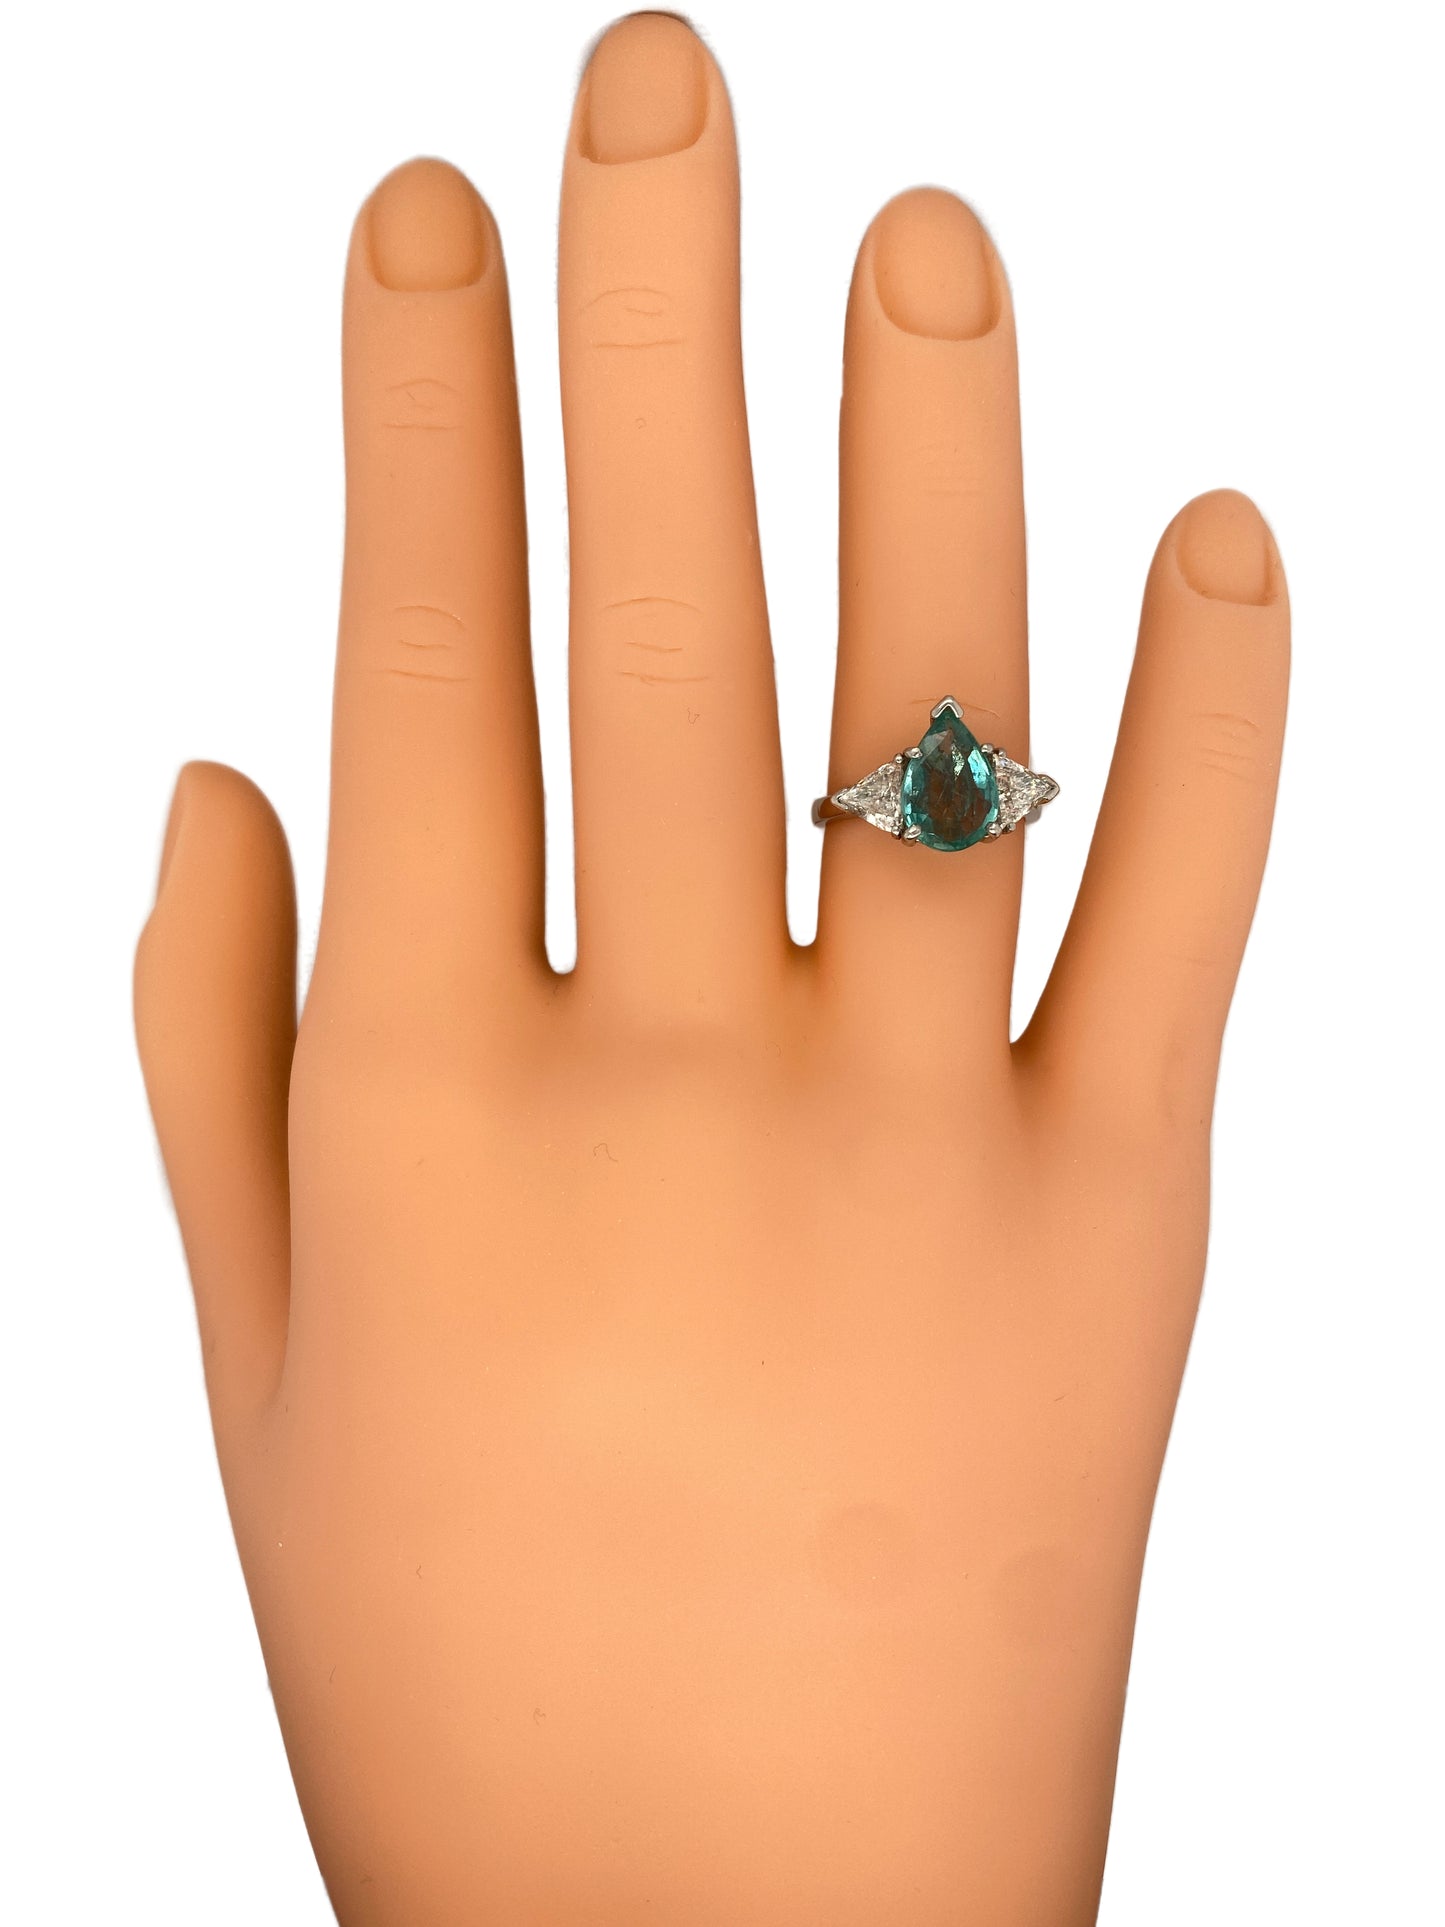 Circa 1980s 1.50 Carat Pear Cut Emerald and Diamond Three Stone Ring